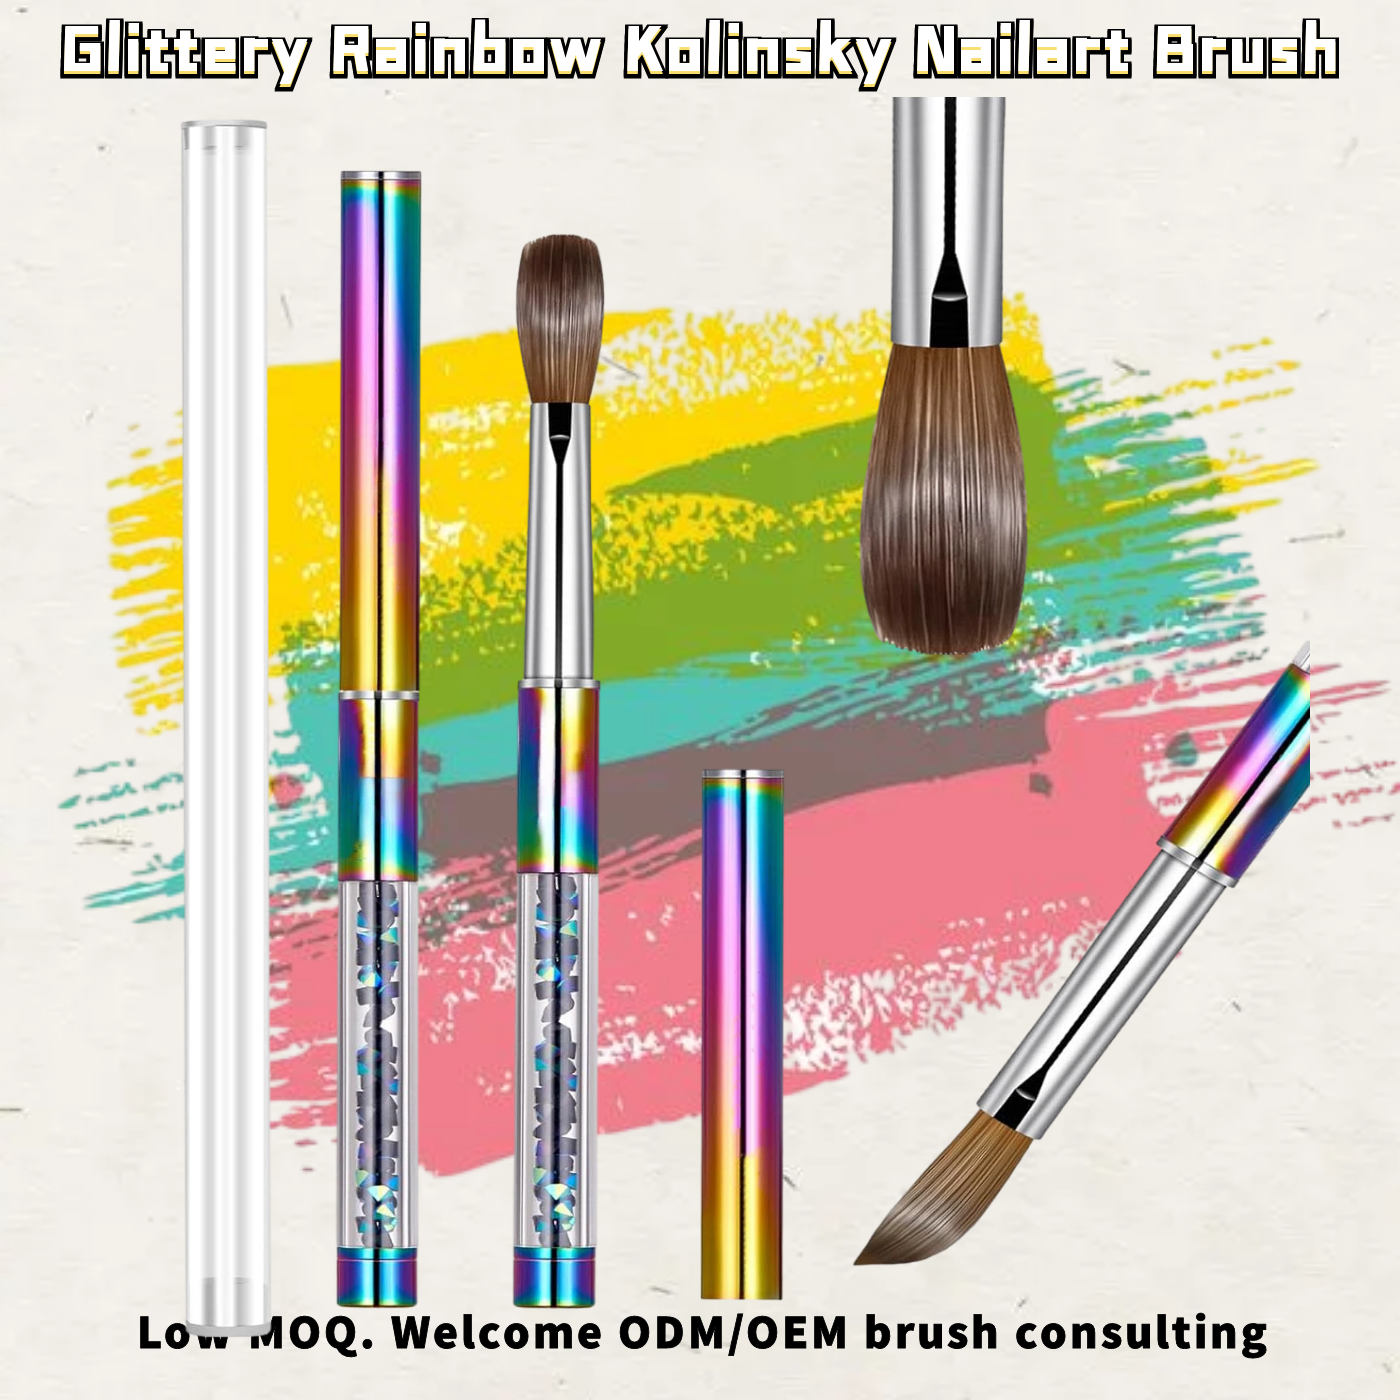 7PCS Glittery Rainbow Kolinsky Nail Art Brush Set